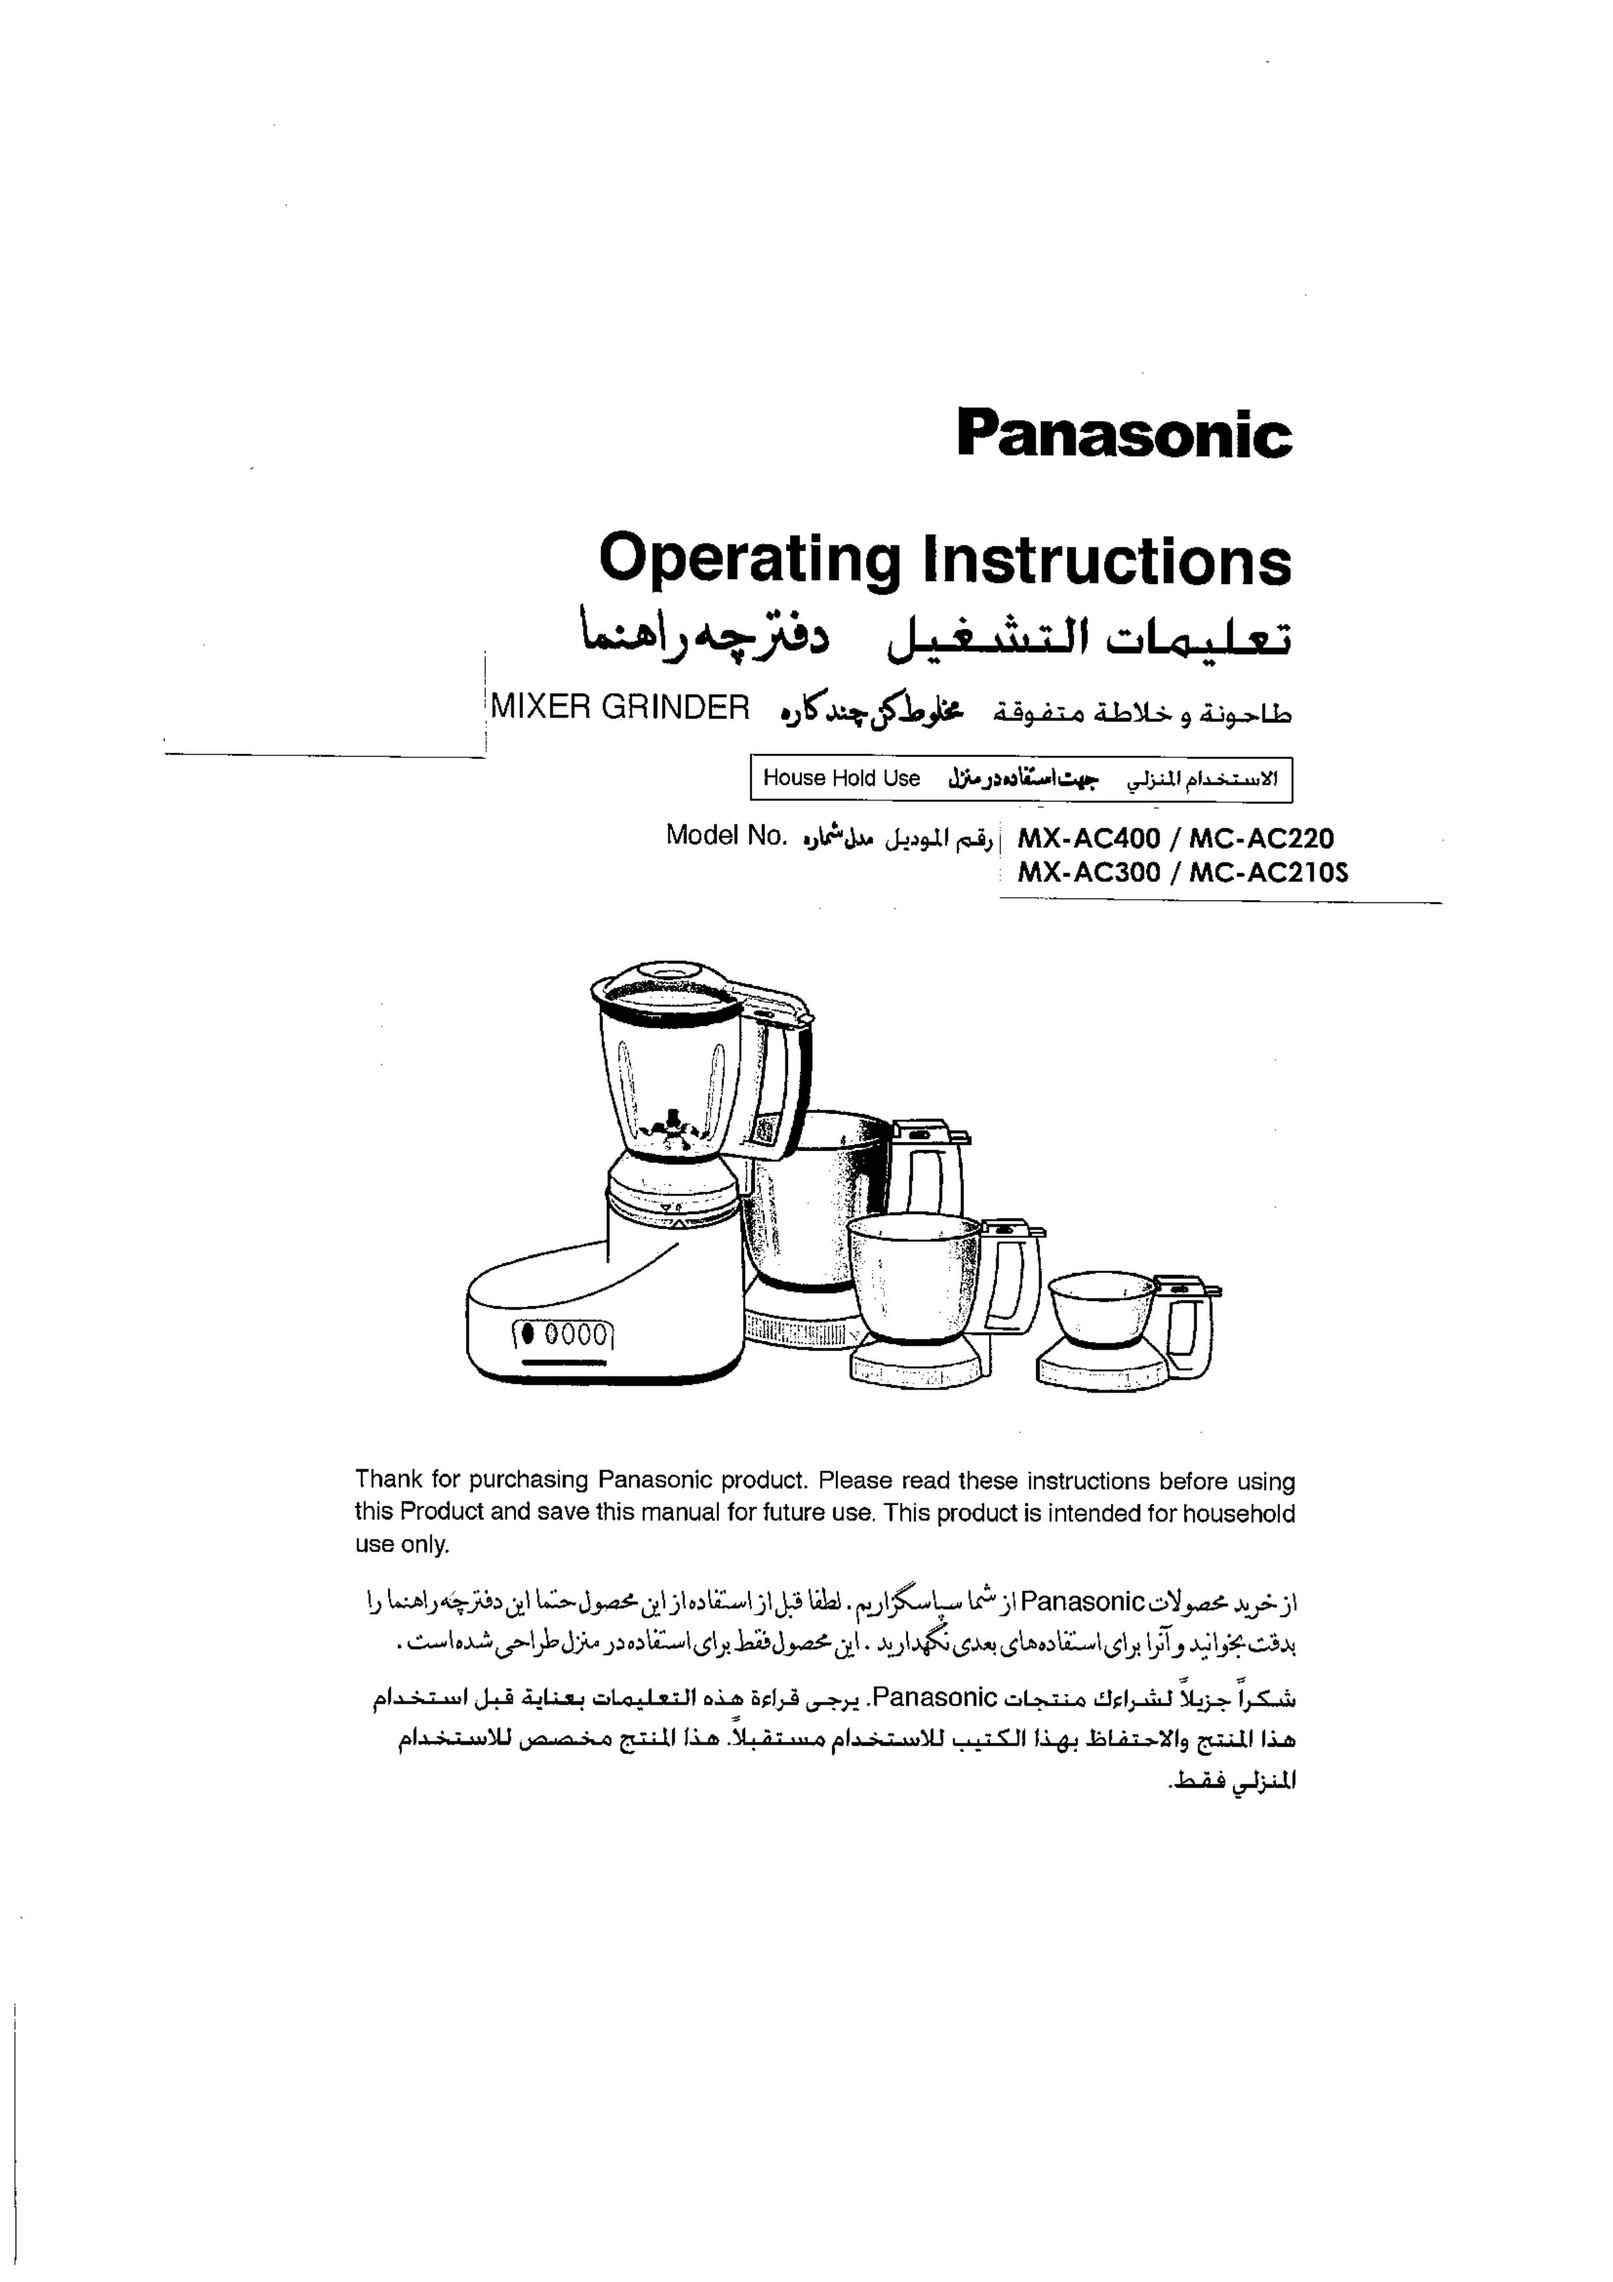 Panasonic MC-AC220 Food Processor User Manual